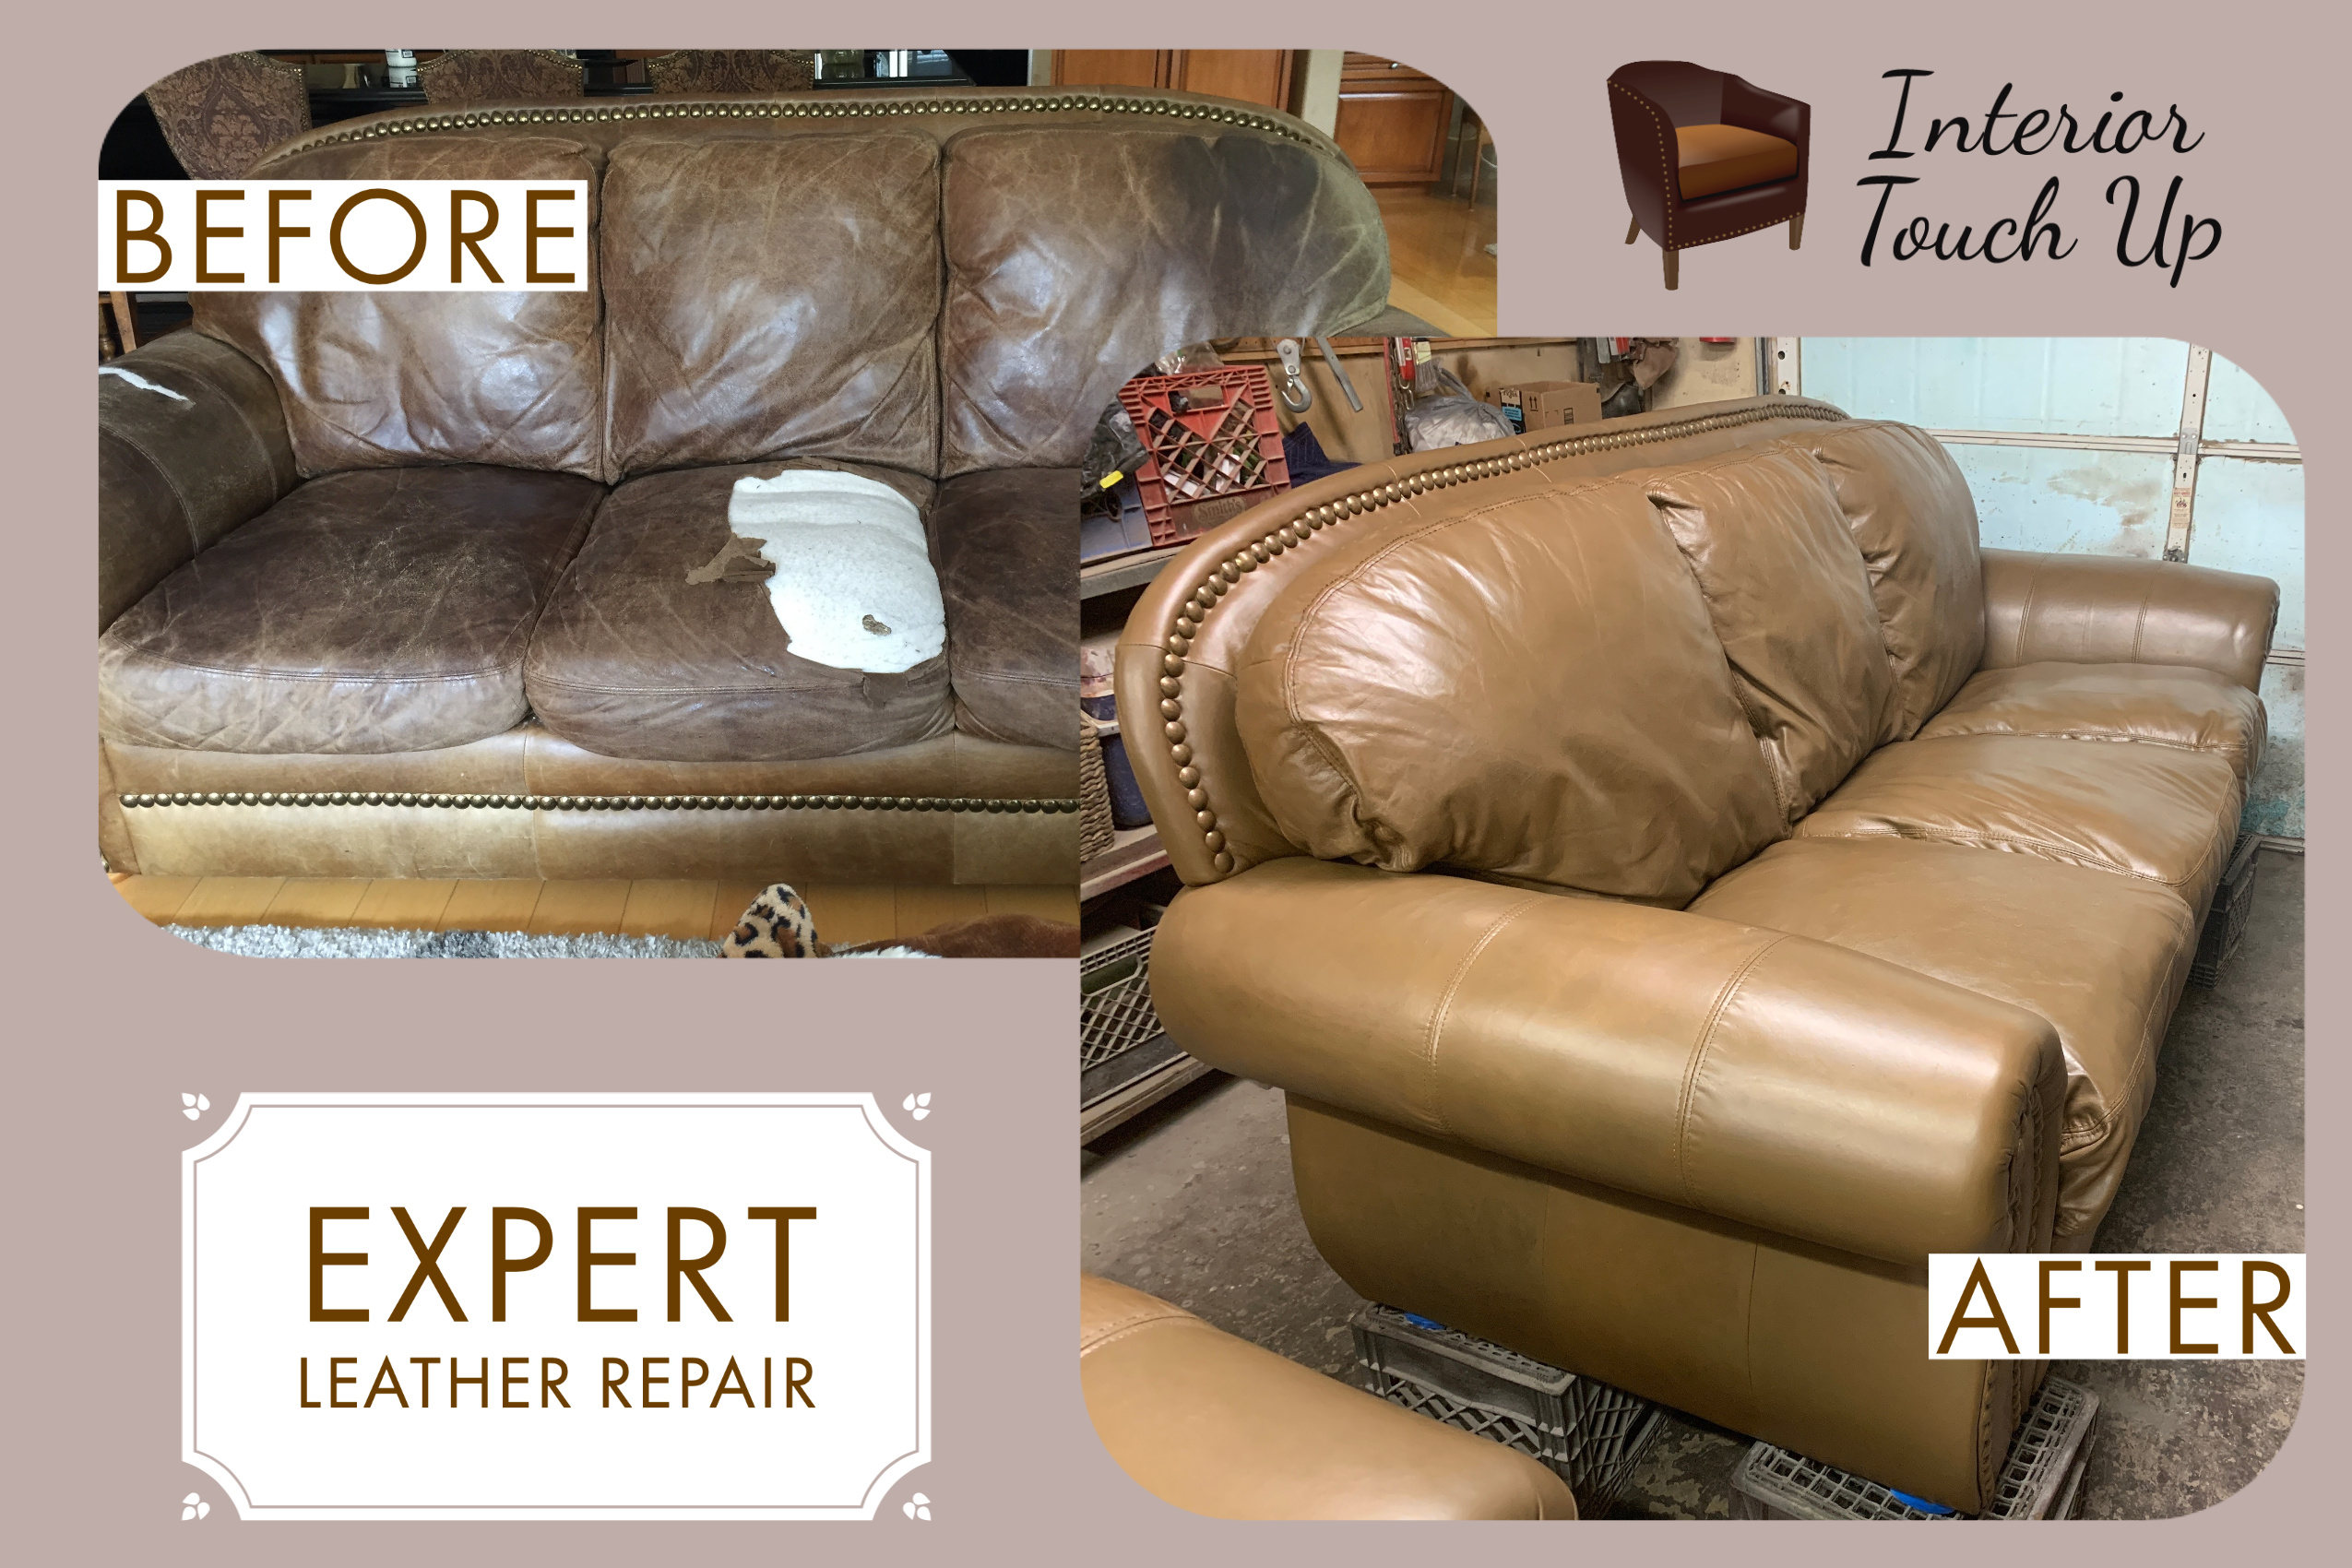 Interior Touch Up - Furniture & Leather Repair in Las Vegas